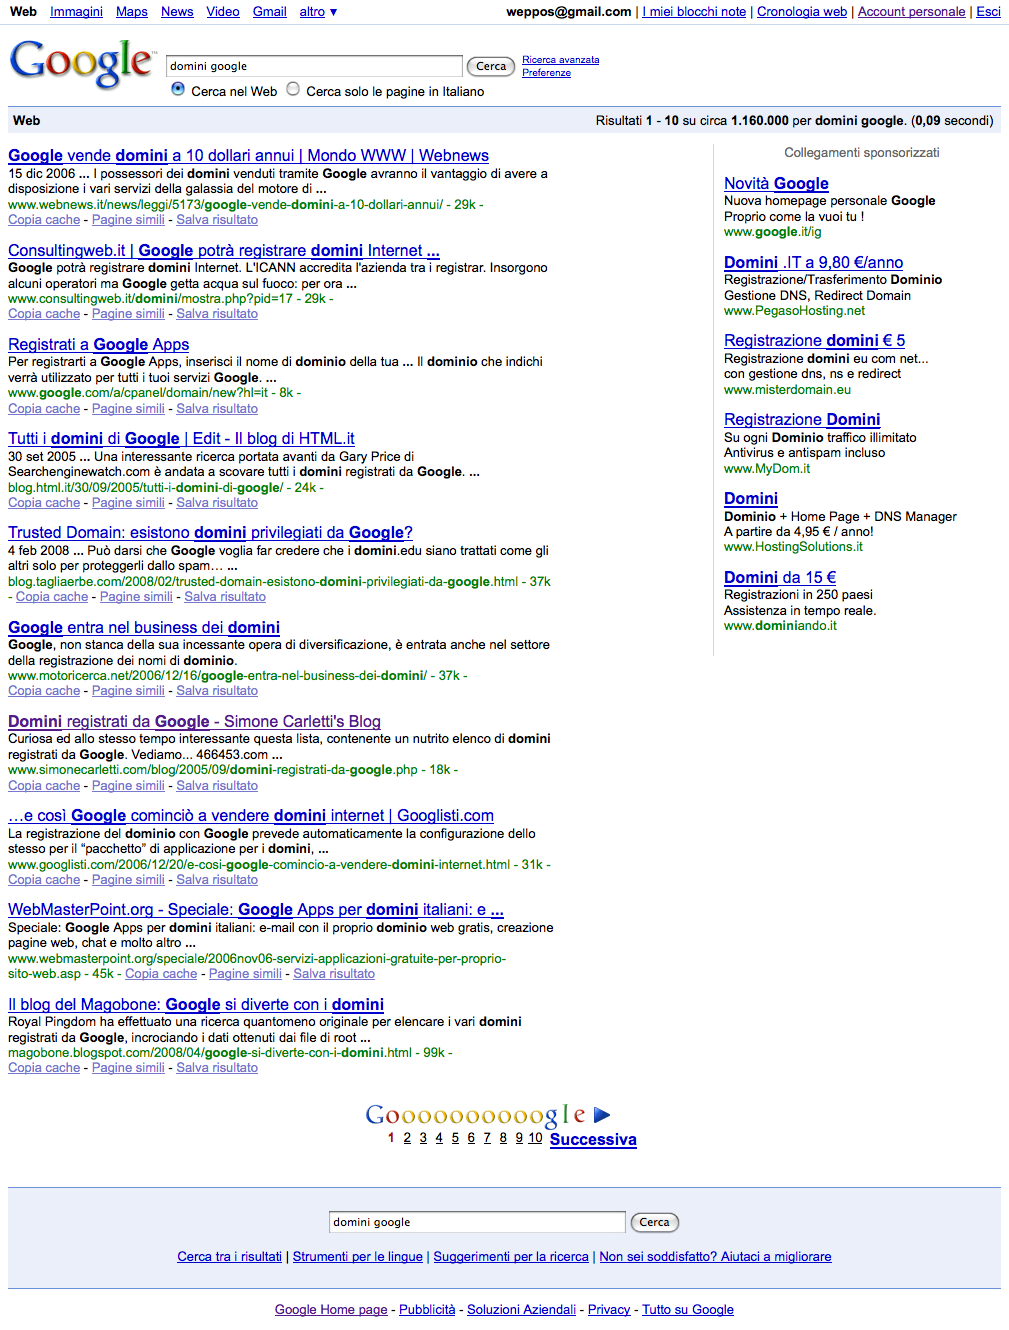 Ricerca Google per domini google